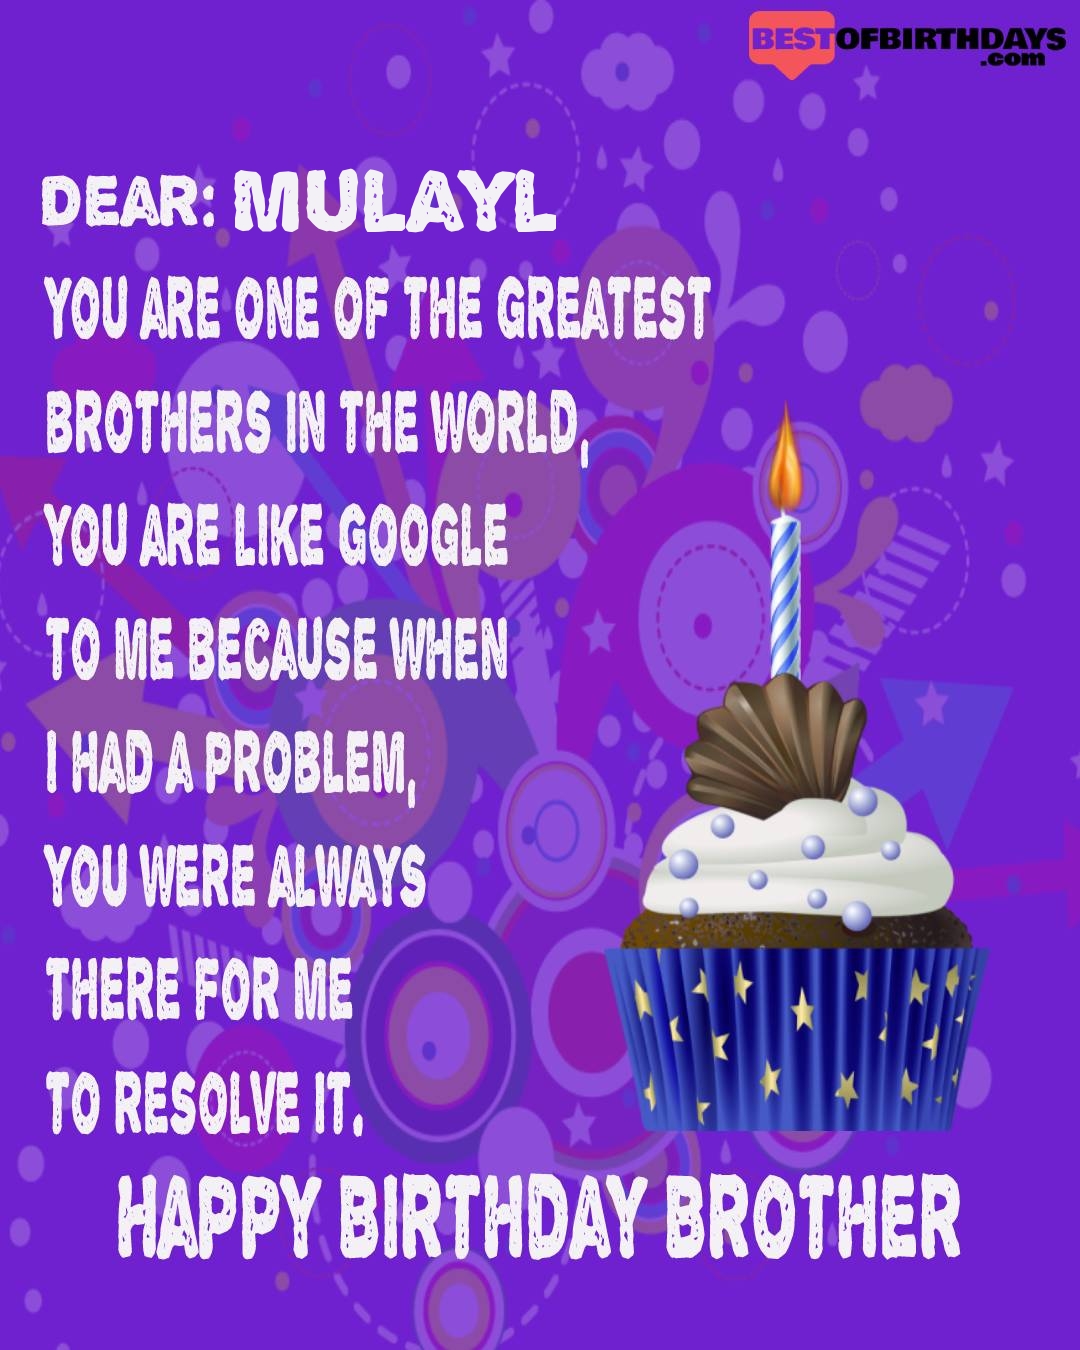 Happy birthday mulayl bhai brother bro